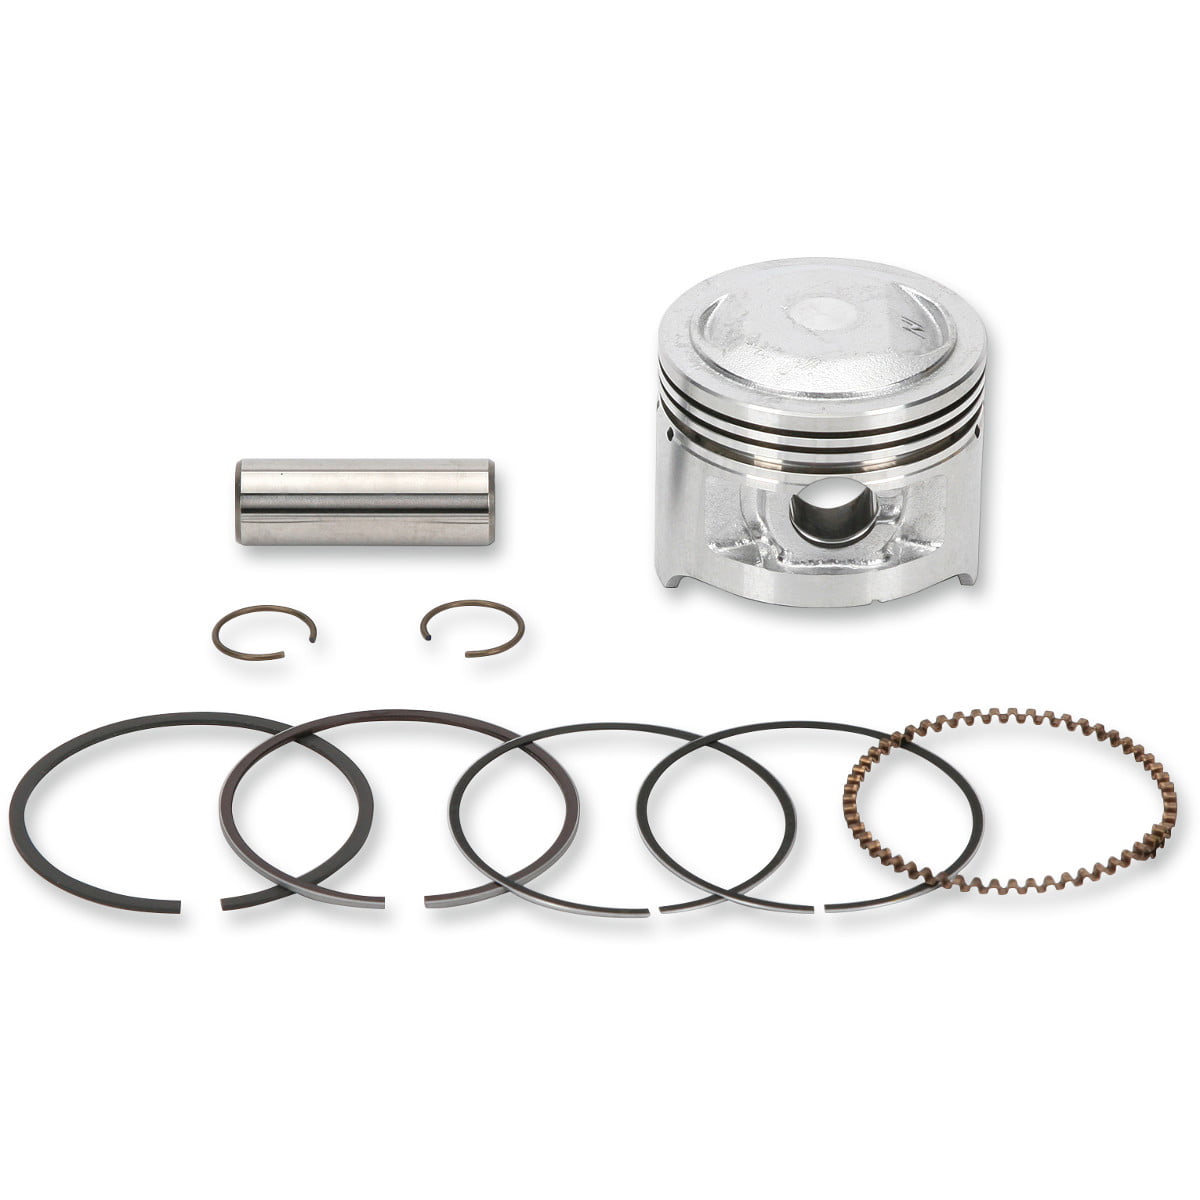 Amazon.com: Compressor piston rings : Tools & Home Improvement